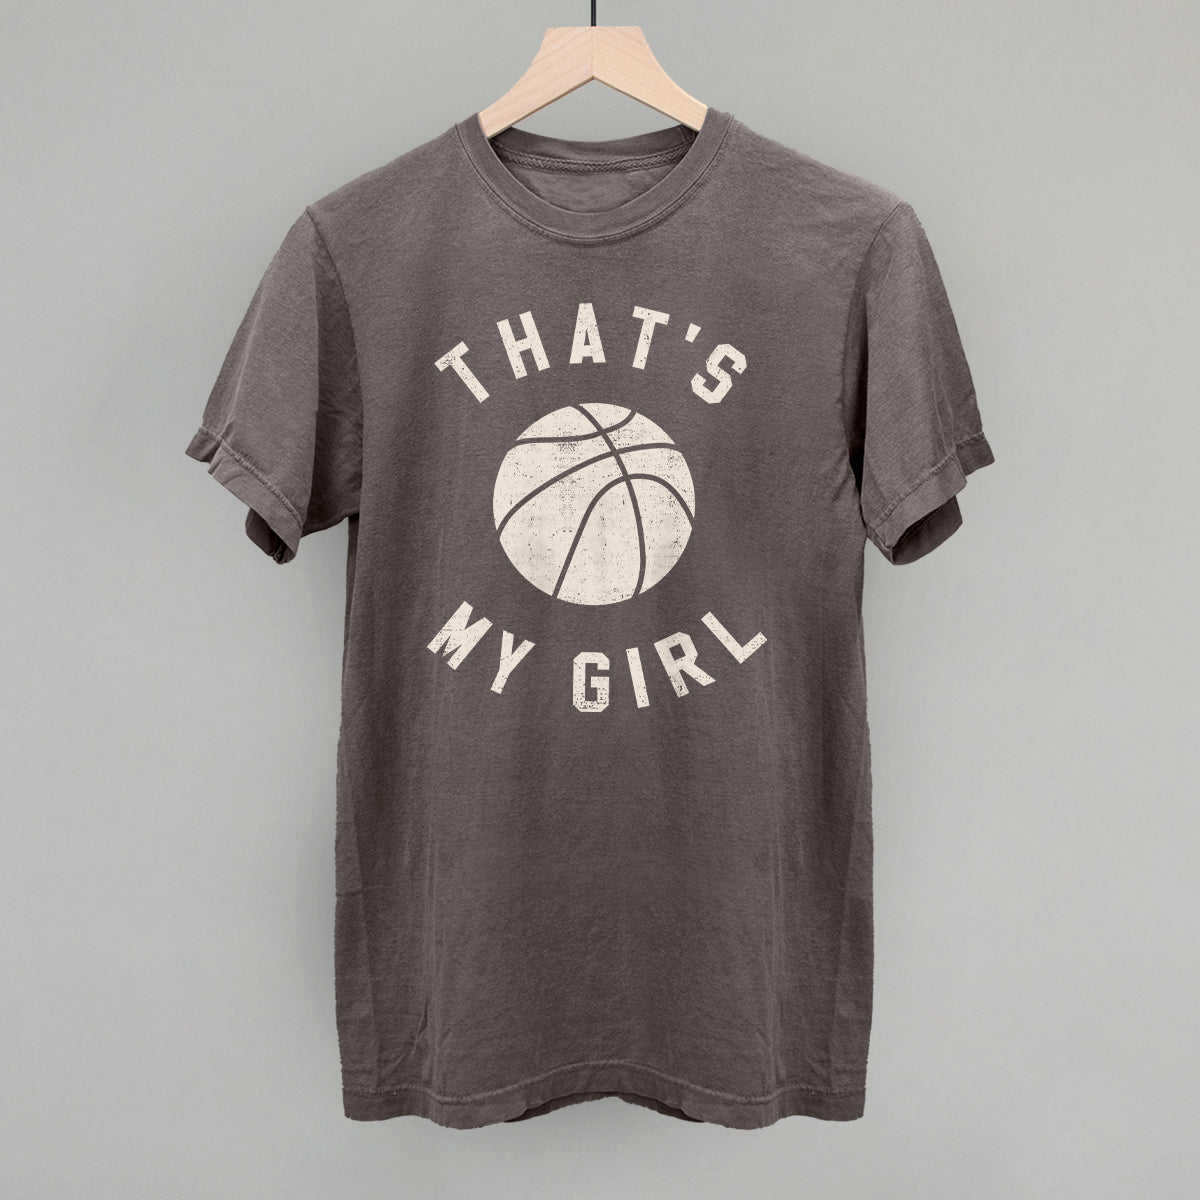 That's My Girl Basketball